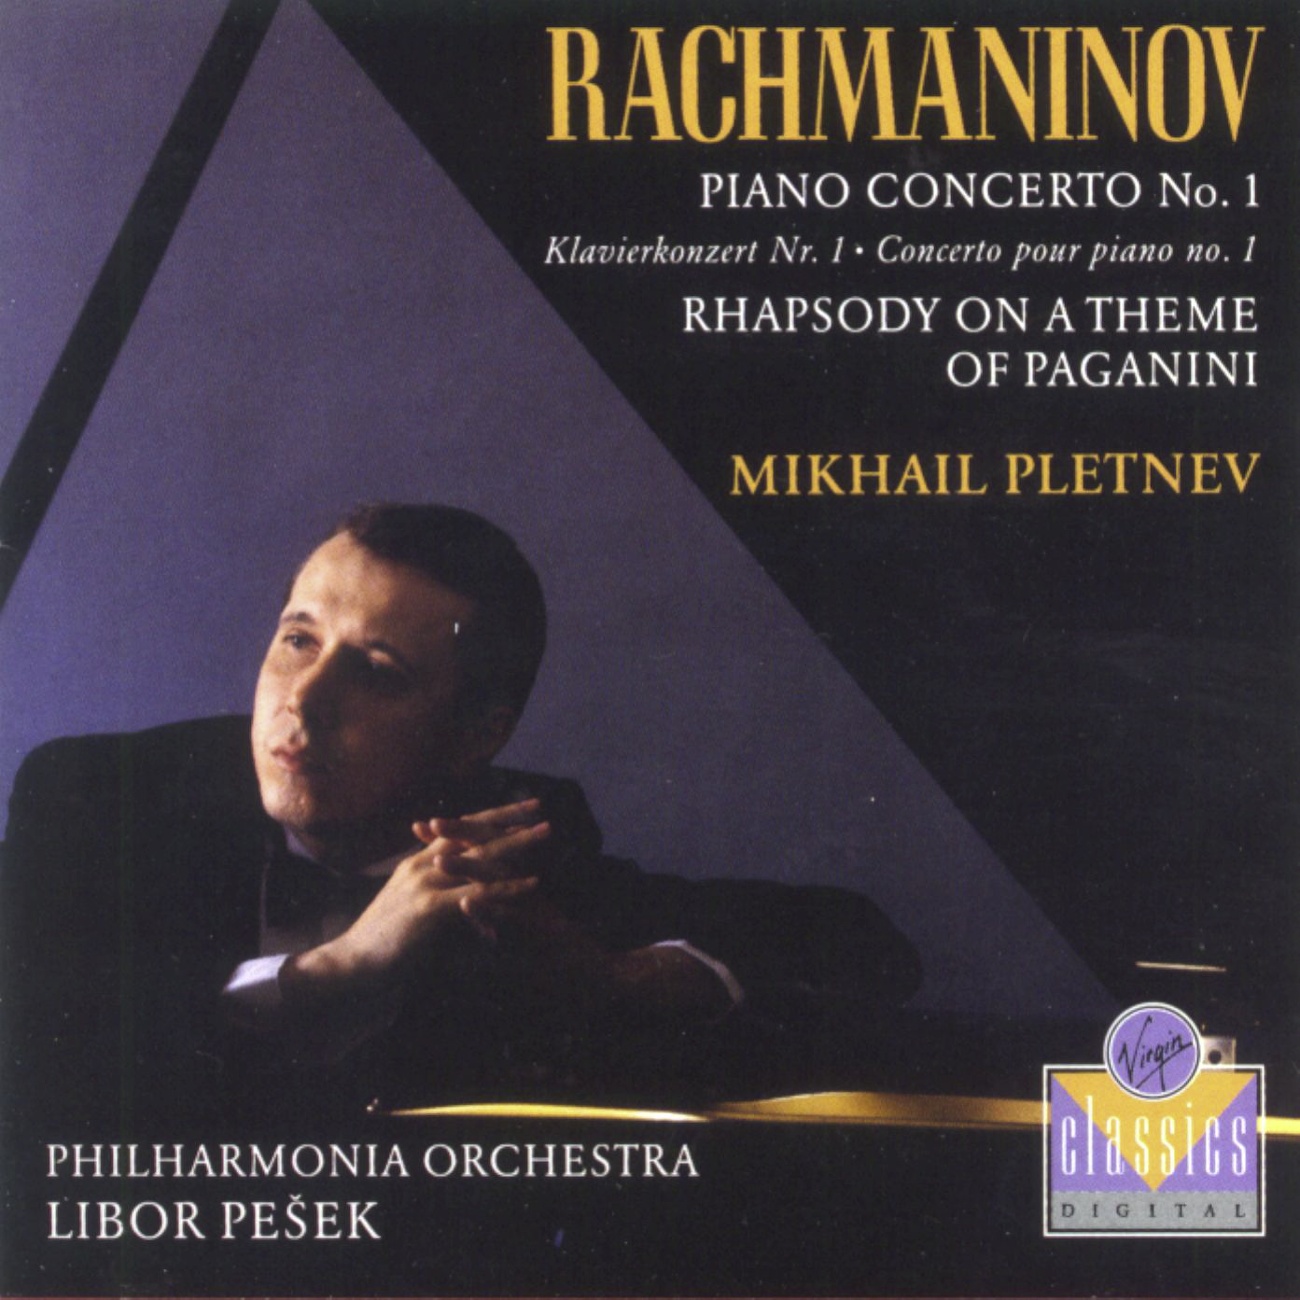 Rhapsody on a Theme of Paganini: Variation IX - L'istesso tempo